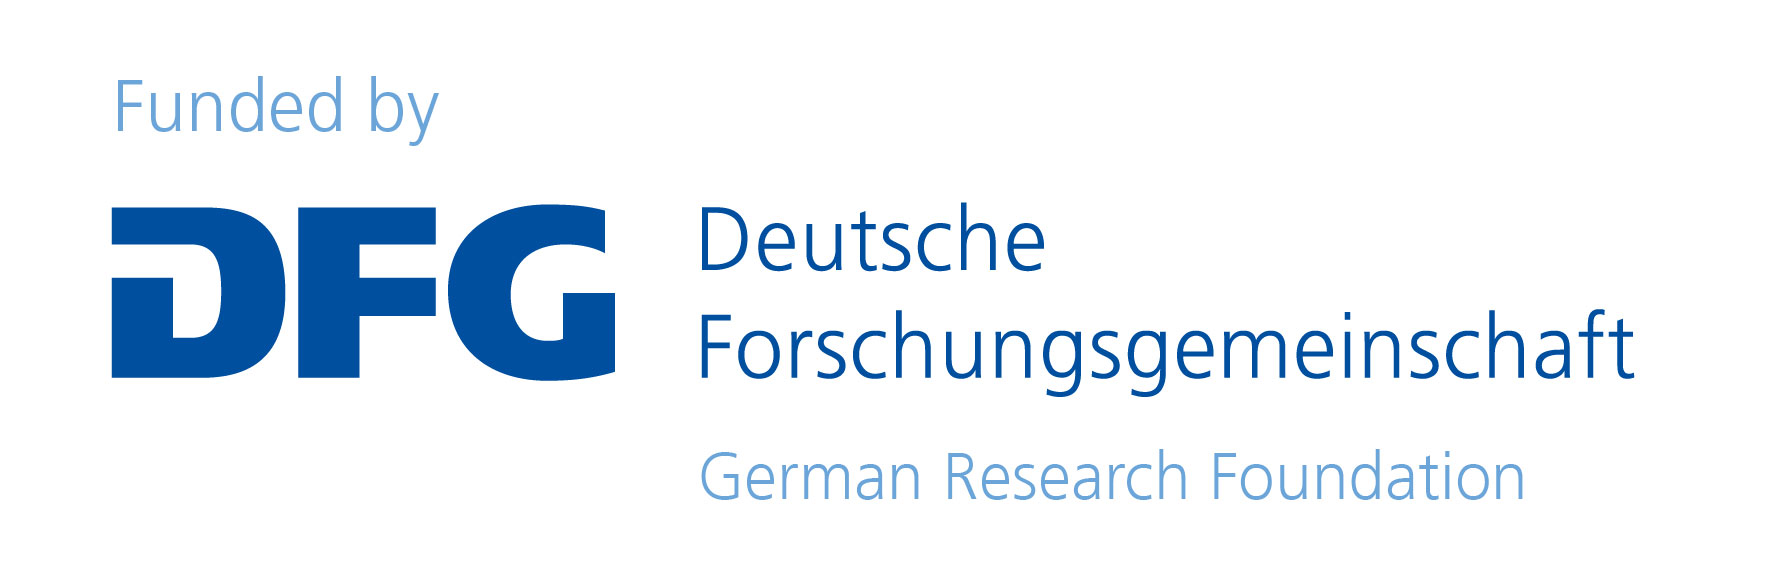 Abbildung des DFG-Logos mit dem Hinweis funded by